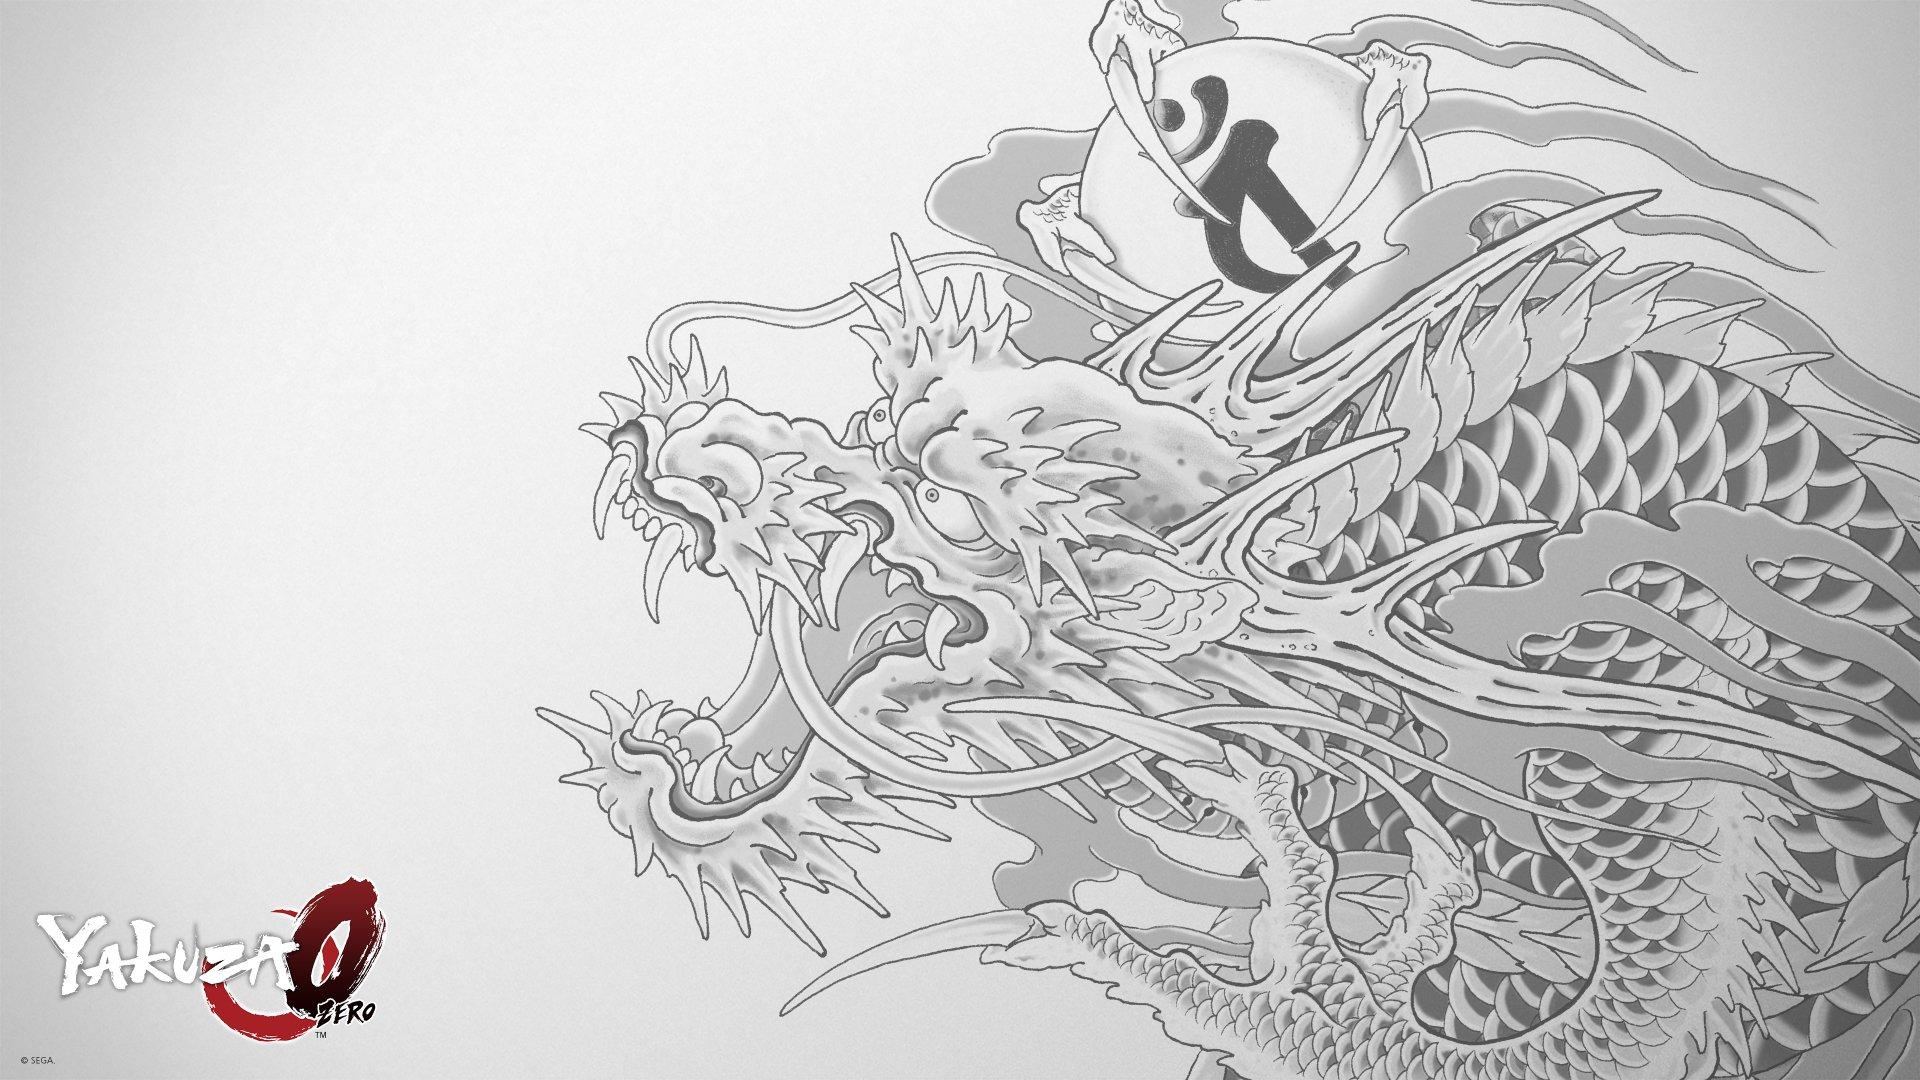 Yakuza 0 HD Wallpaper and Background Image